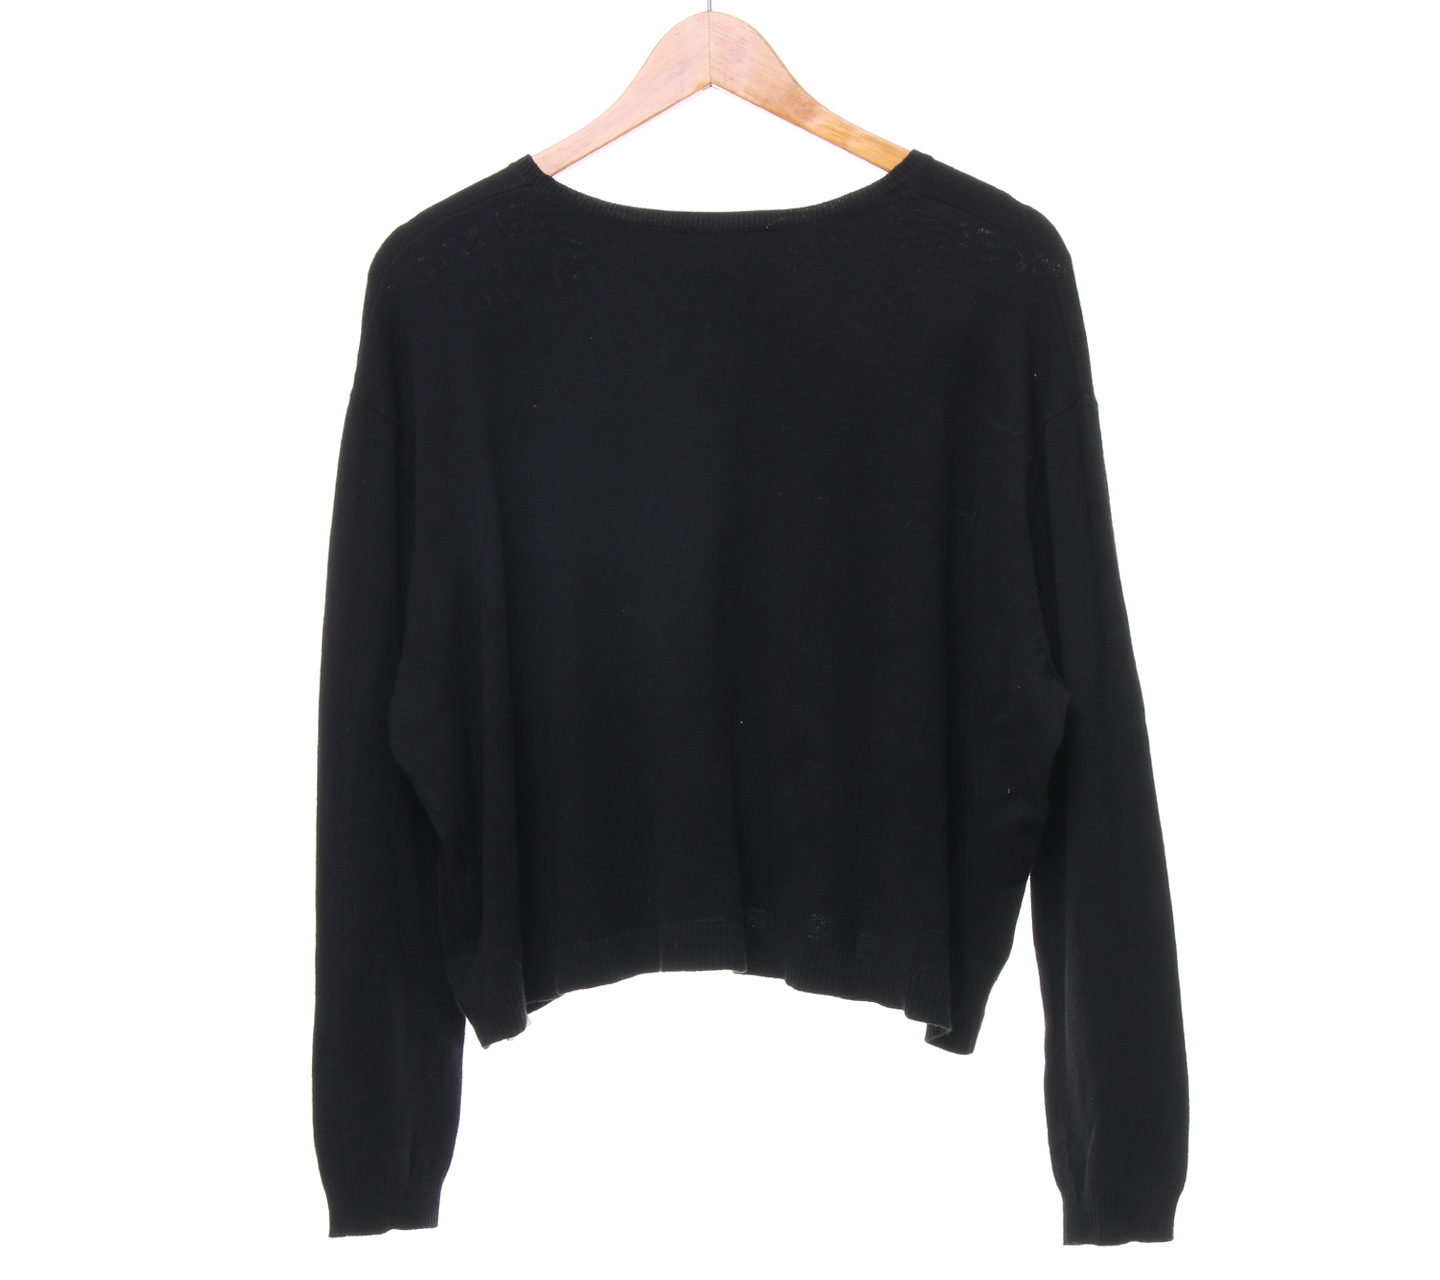 Zara Black Knit Sweater